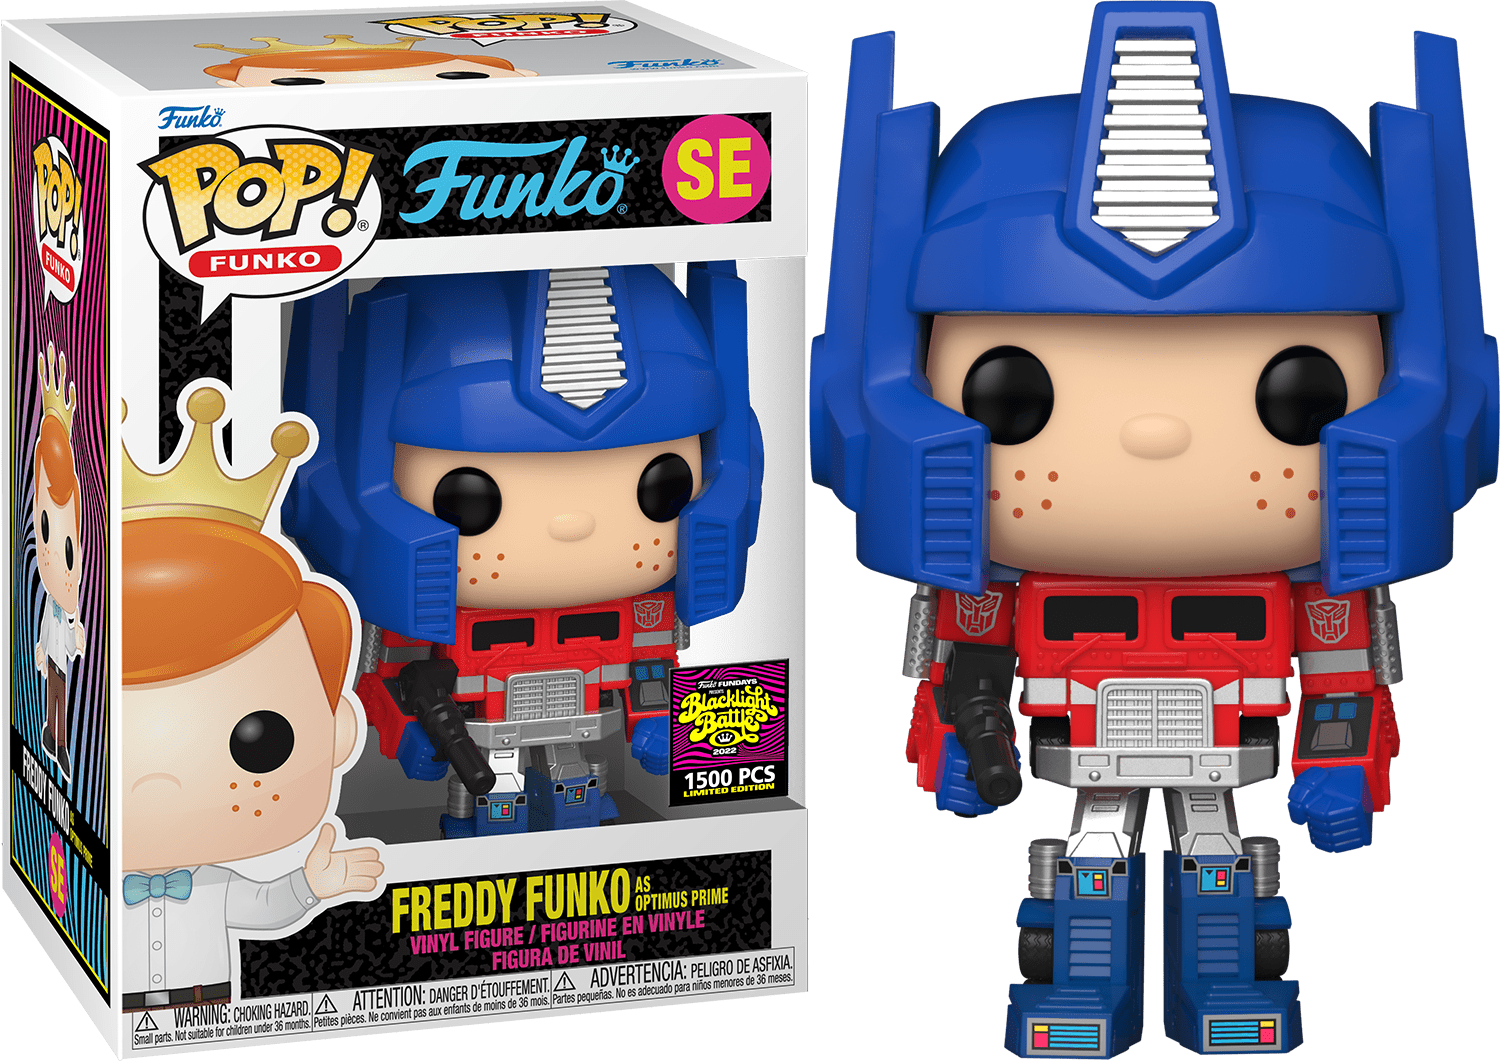 Freddy Funko as Optimus Prime